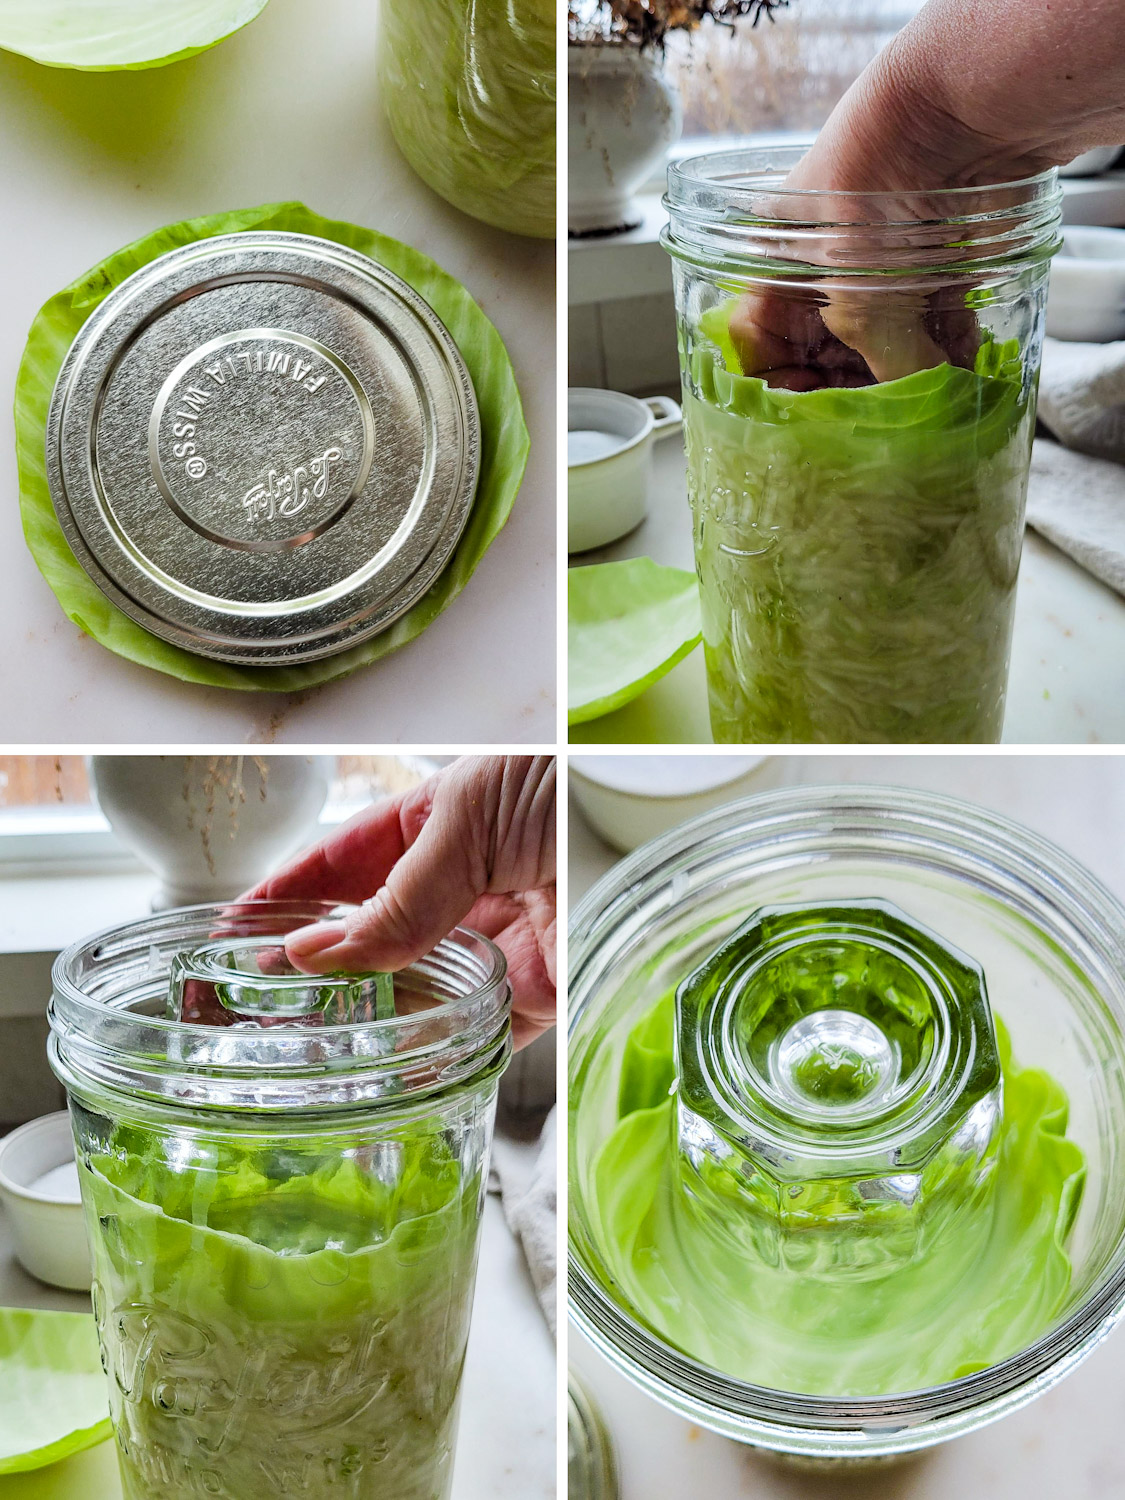 Collage showing preparing the jar with sauerkraut to begin fermenting.